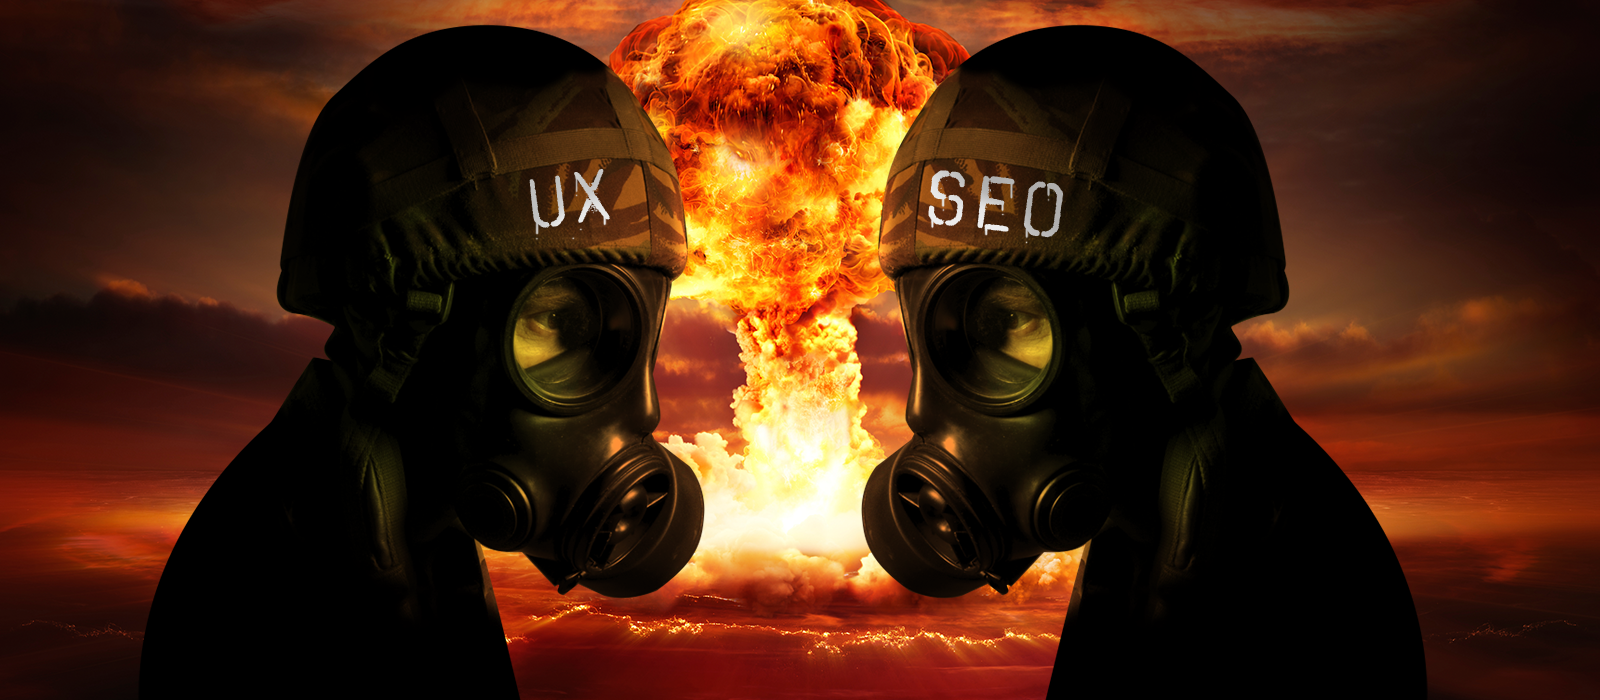 Website-Warfare-UX-vs-SEO-hero-image